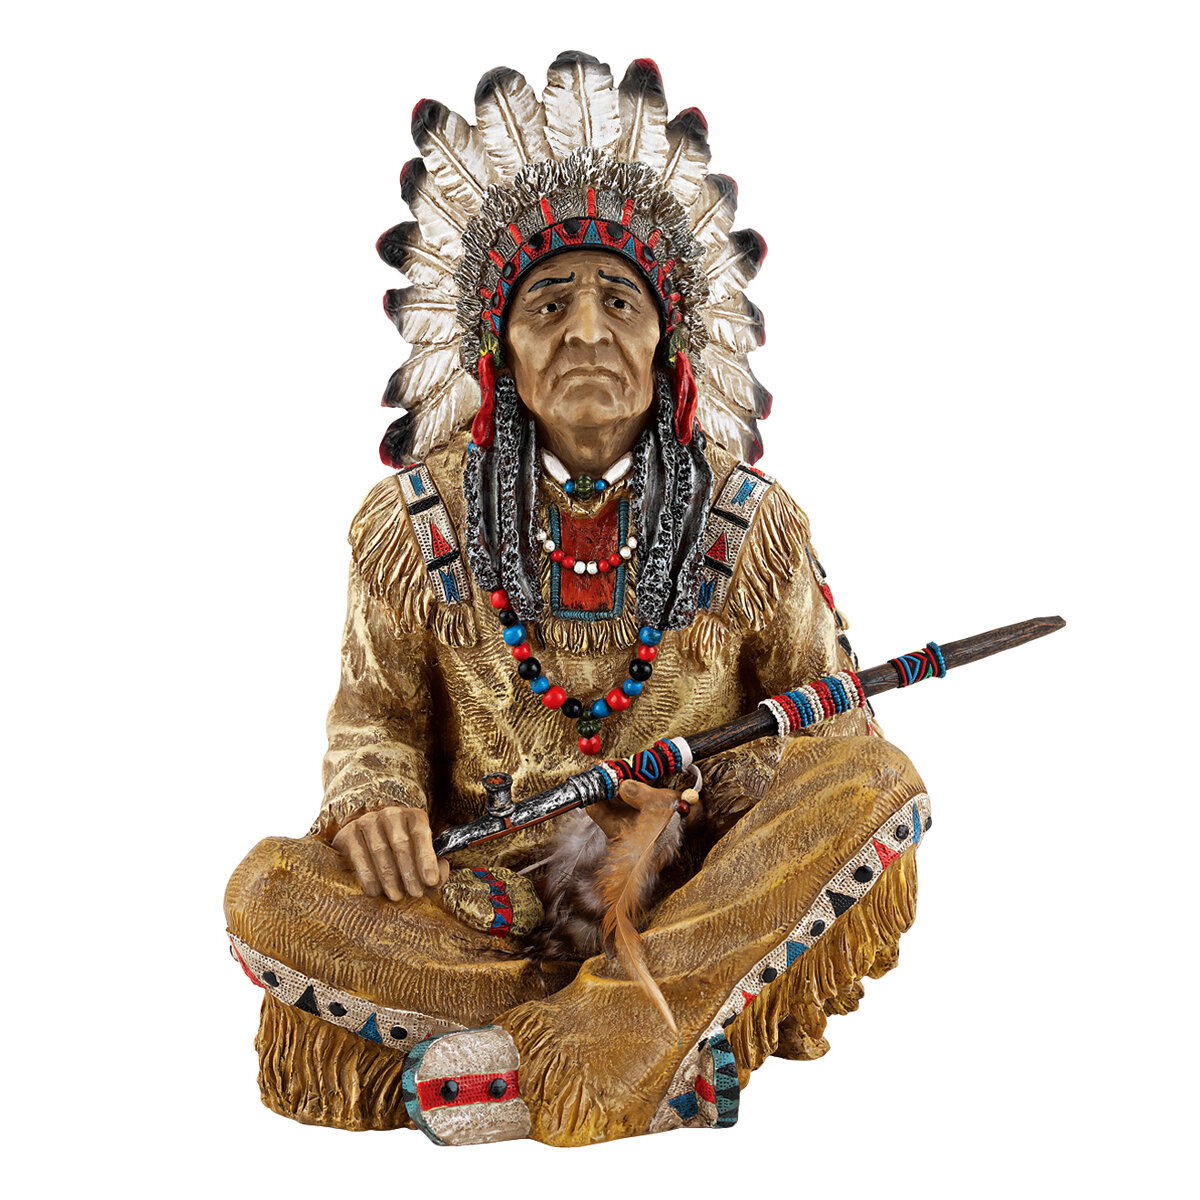 Tribal Native American Warrior Verdigris Bronze Sculpture Dancing Eagle Indian